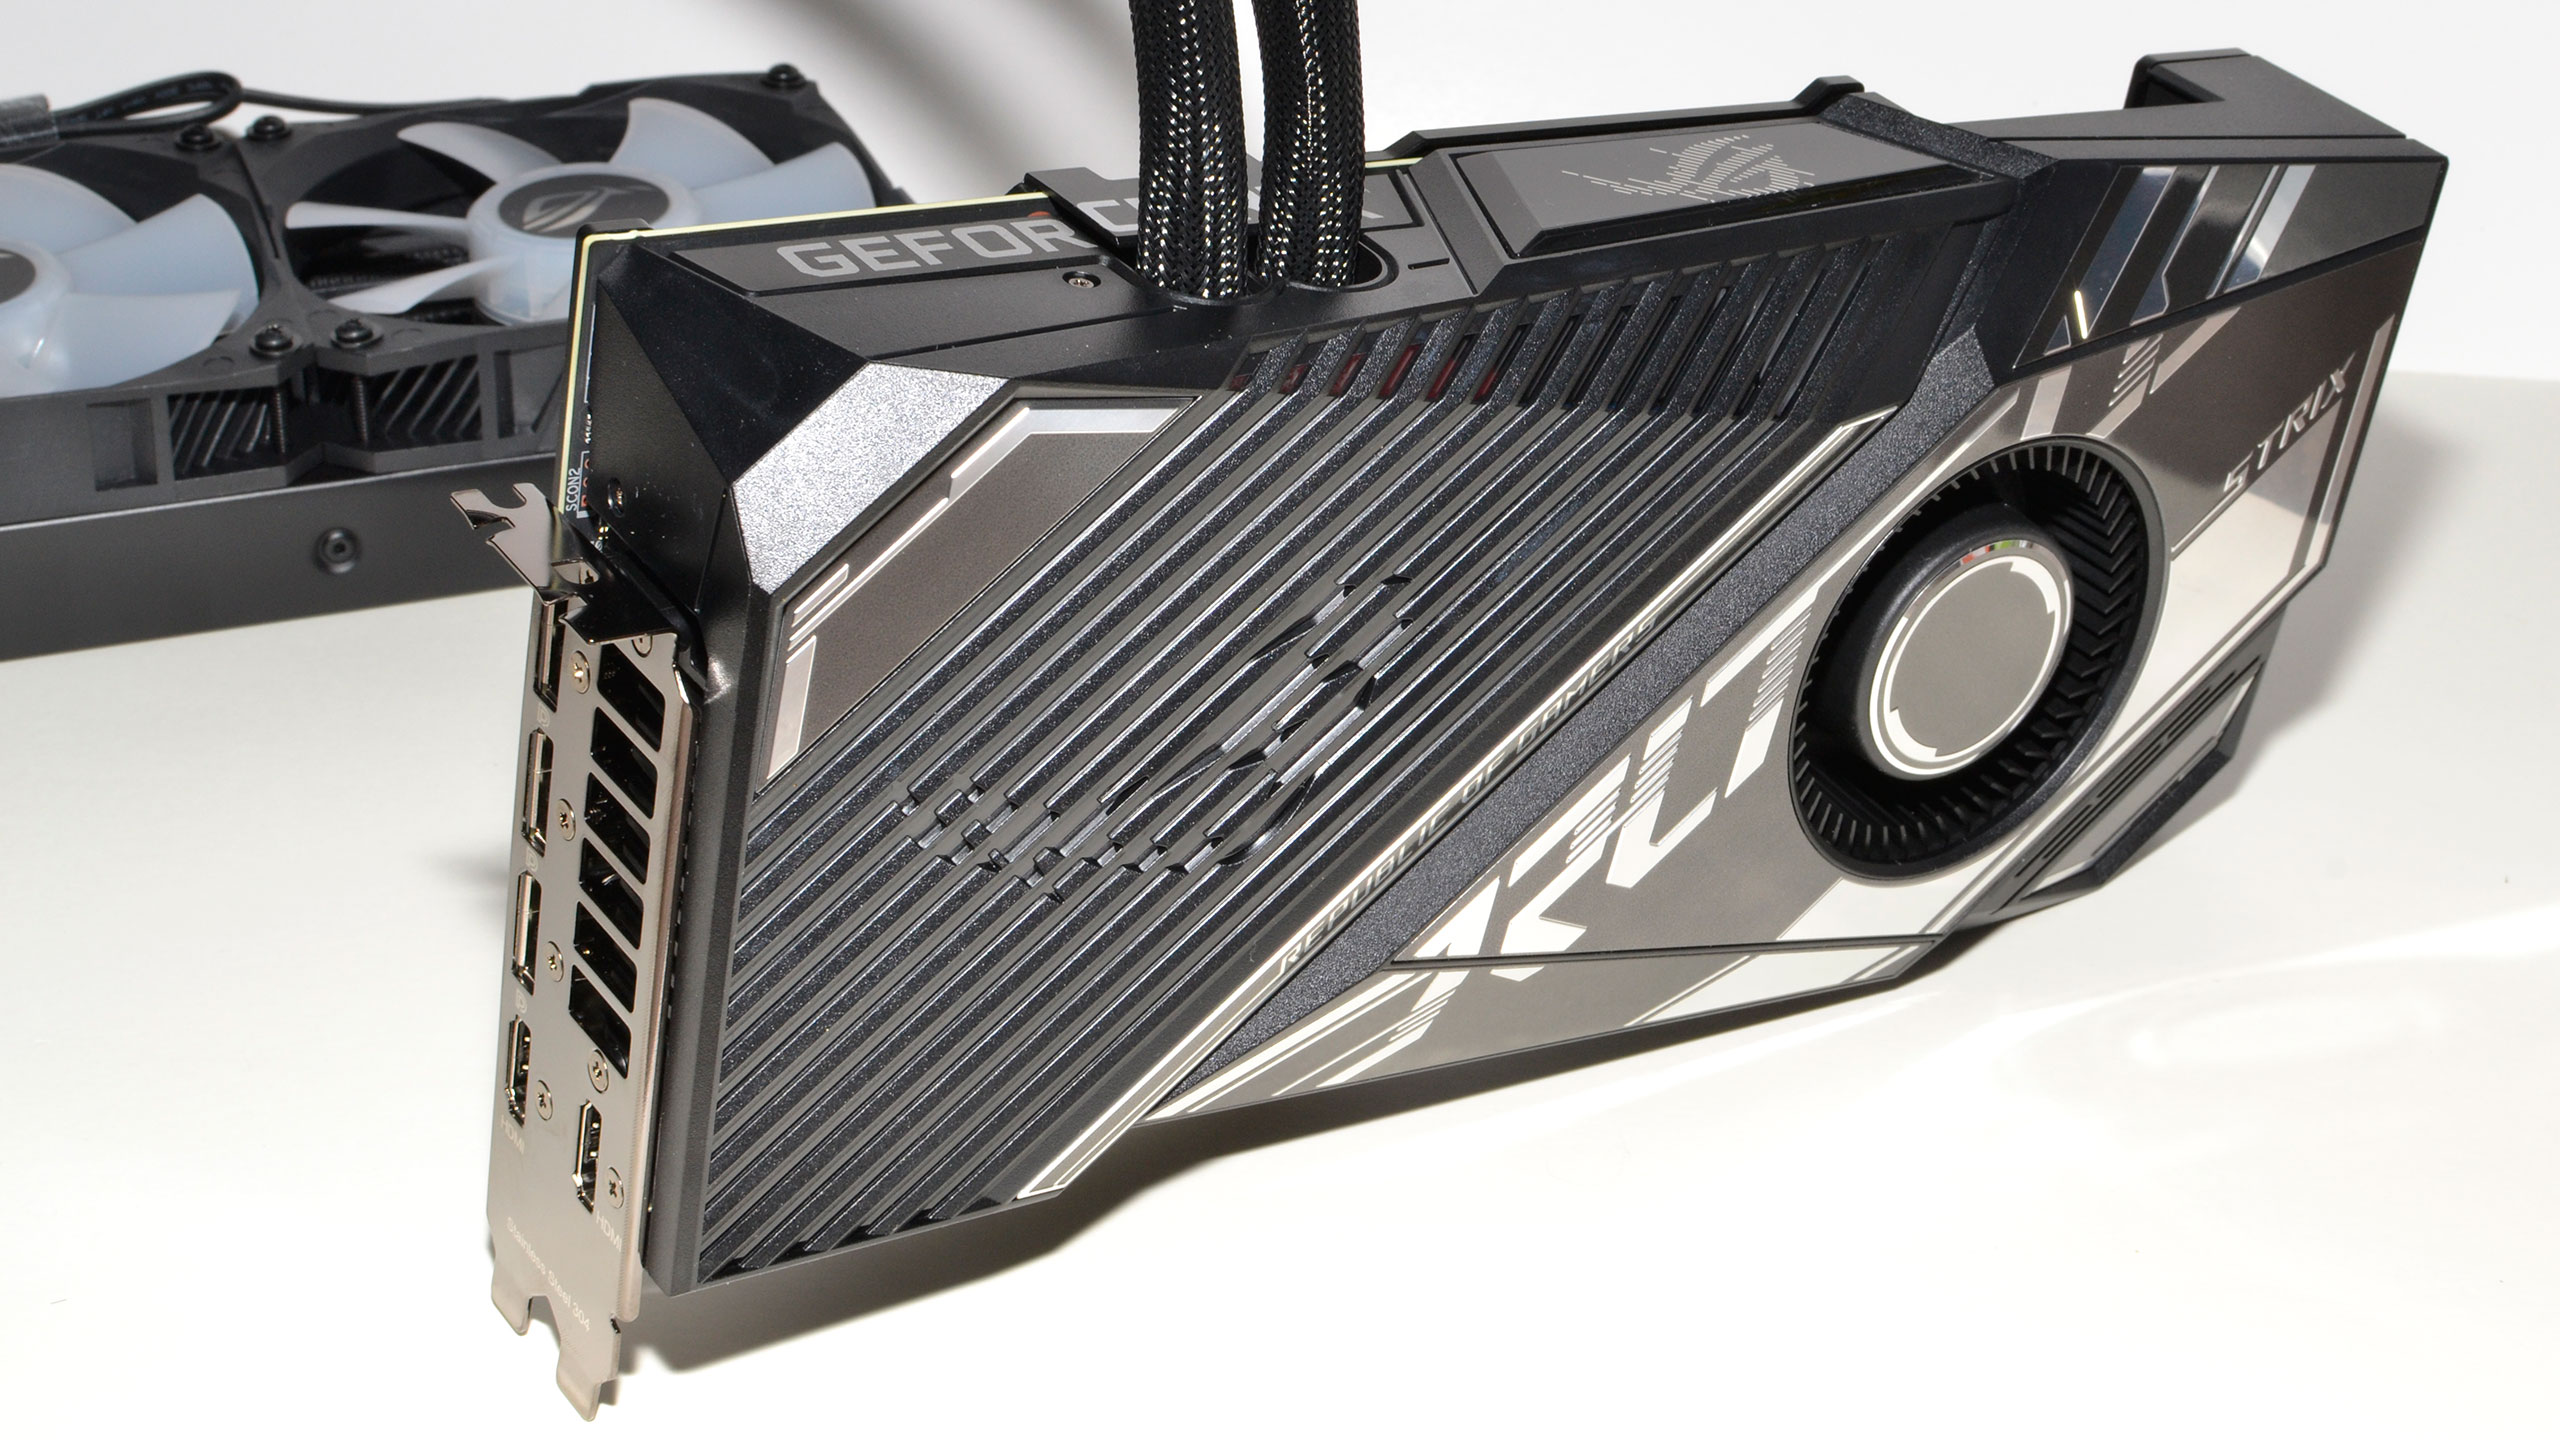 Asus ROG Strix GeForce GTX 1080 Ti OC Review - Tom's Hardware